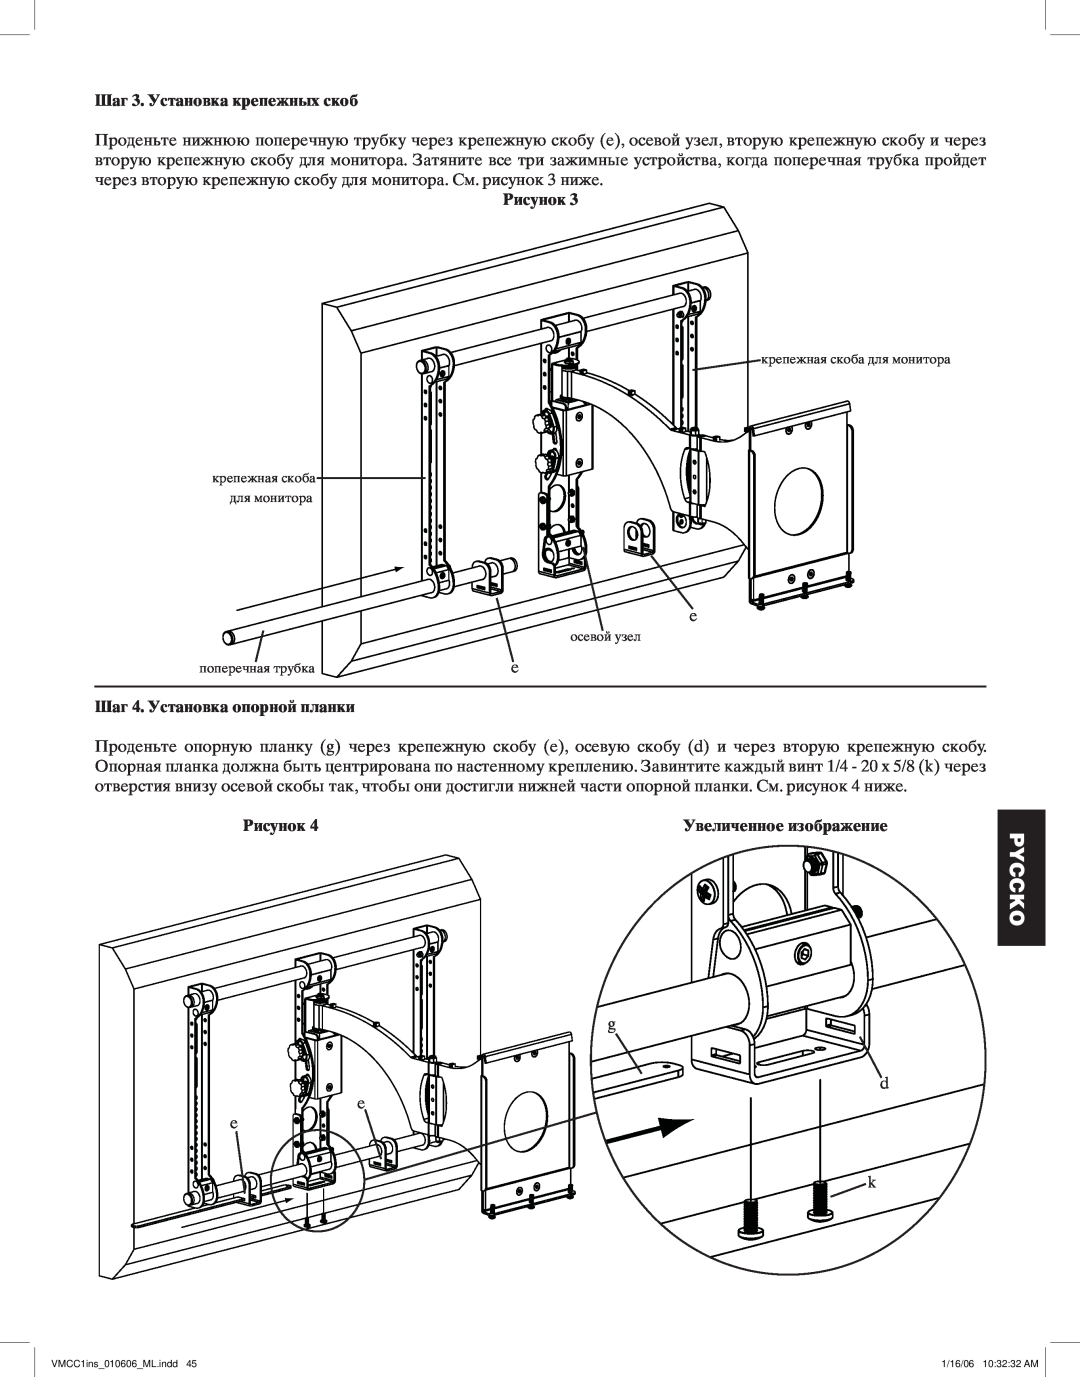 Sanus Systems VMCC1 manual Шаг 3. Установка крепежных скоб, Рисунок, Шаг 4. Установка опорной планки, Pyccko 